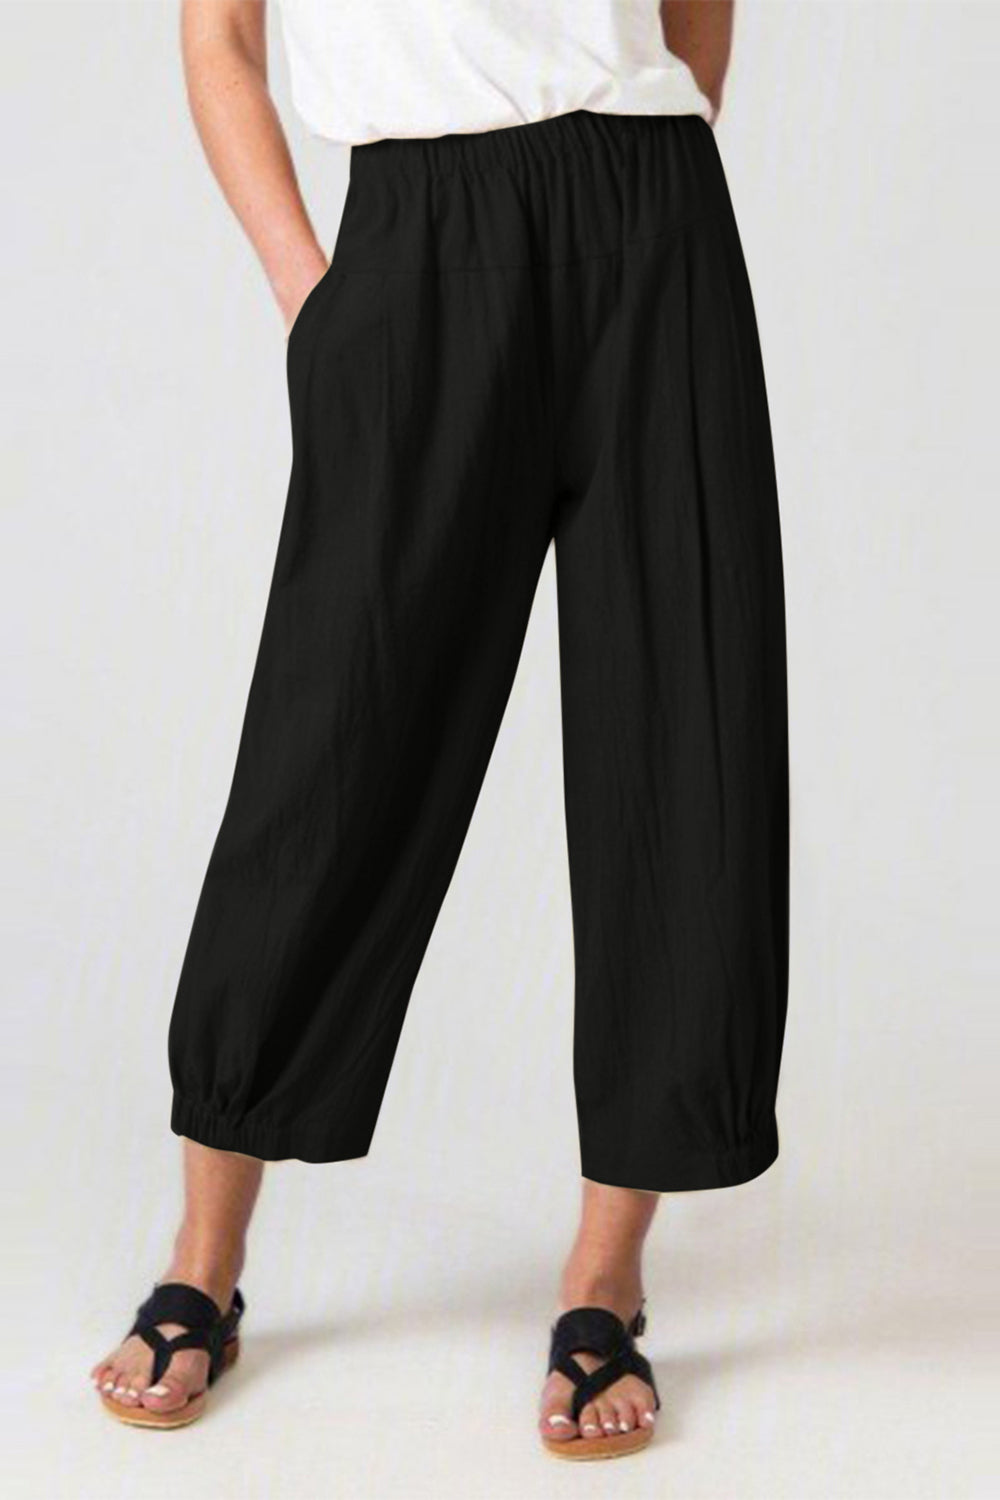 Full Size Elastic Waist Cropped Pants Black Pants